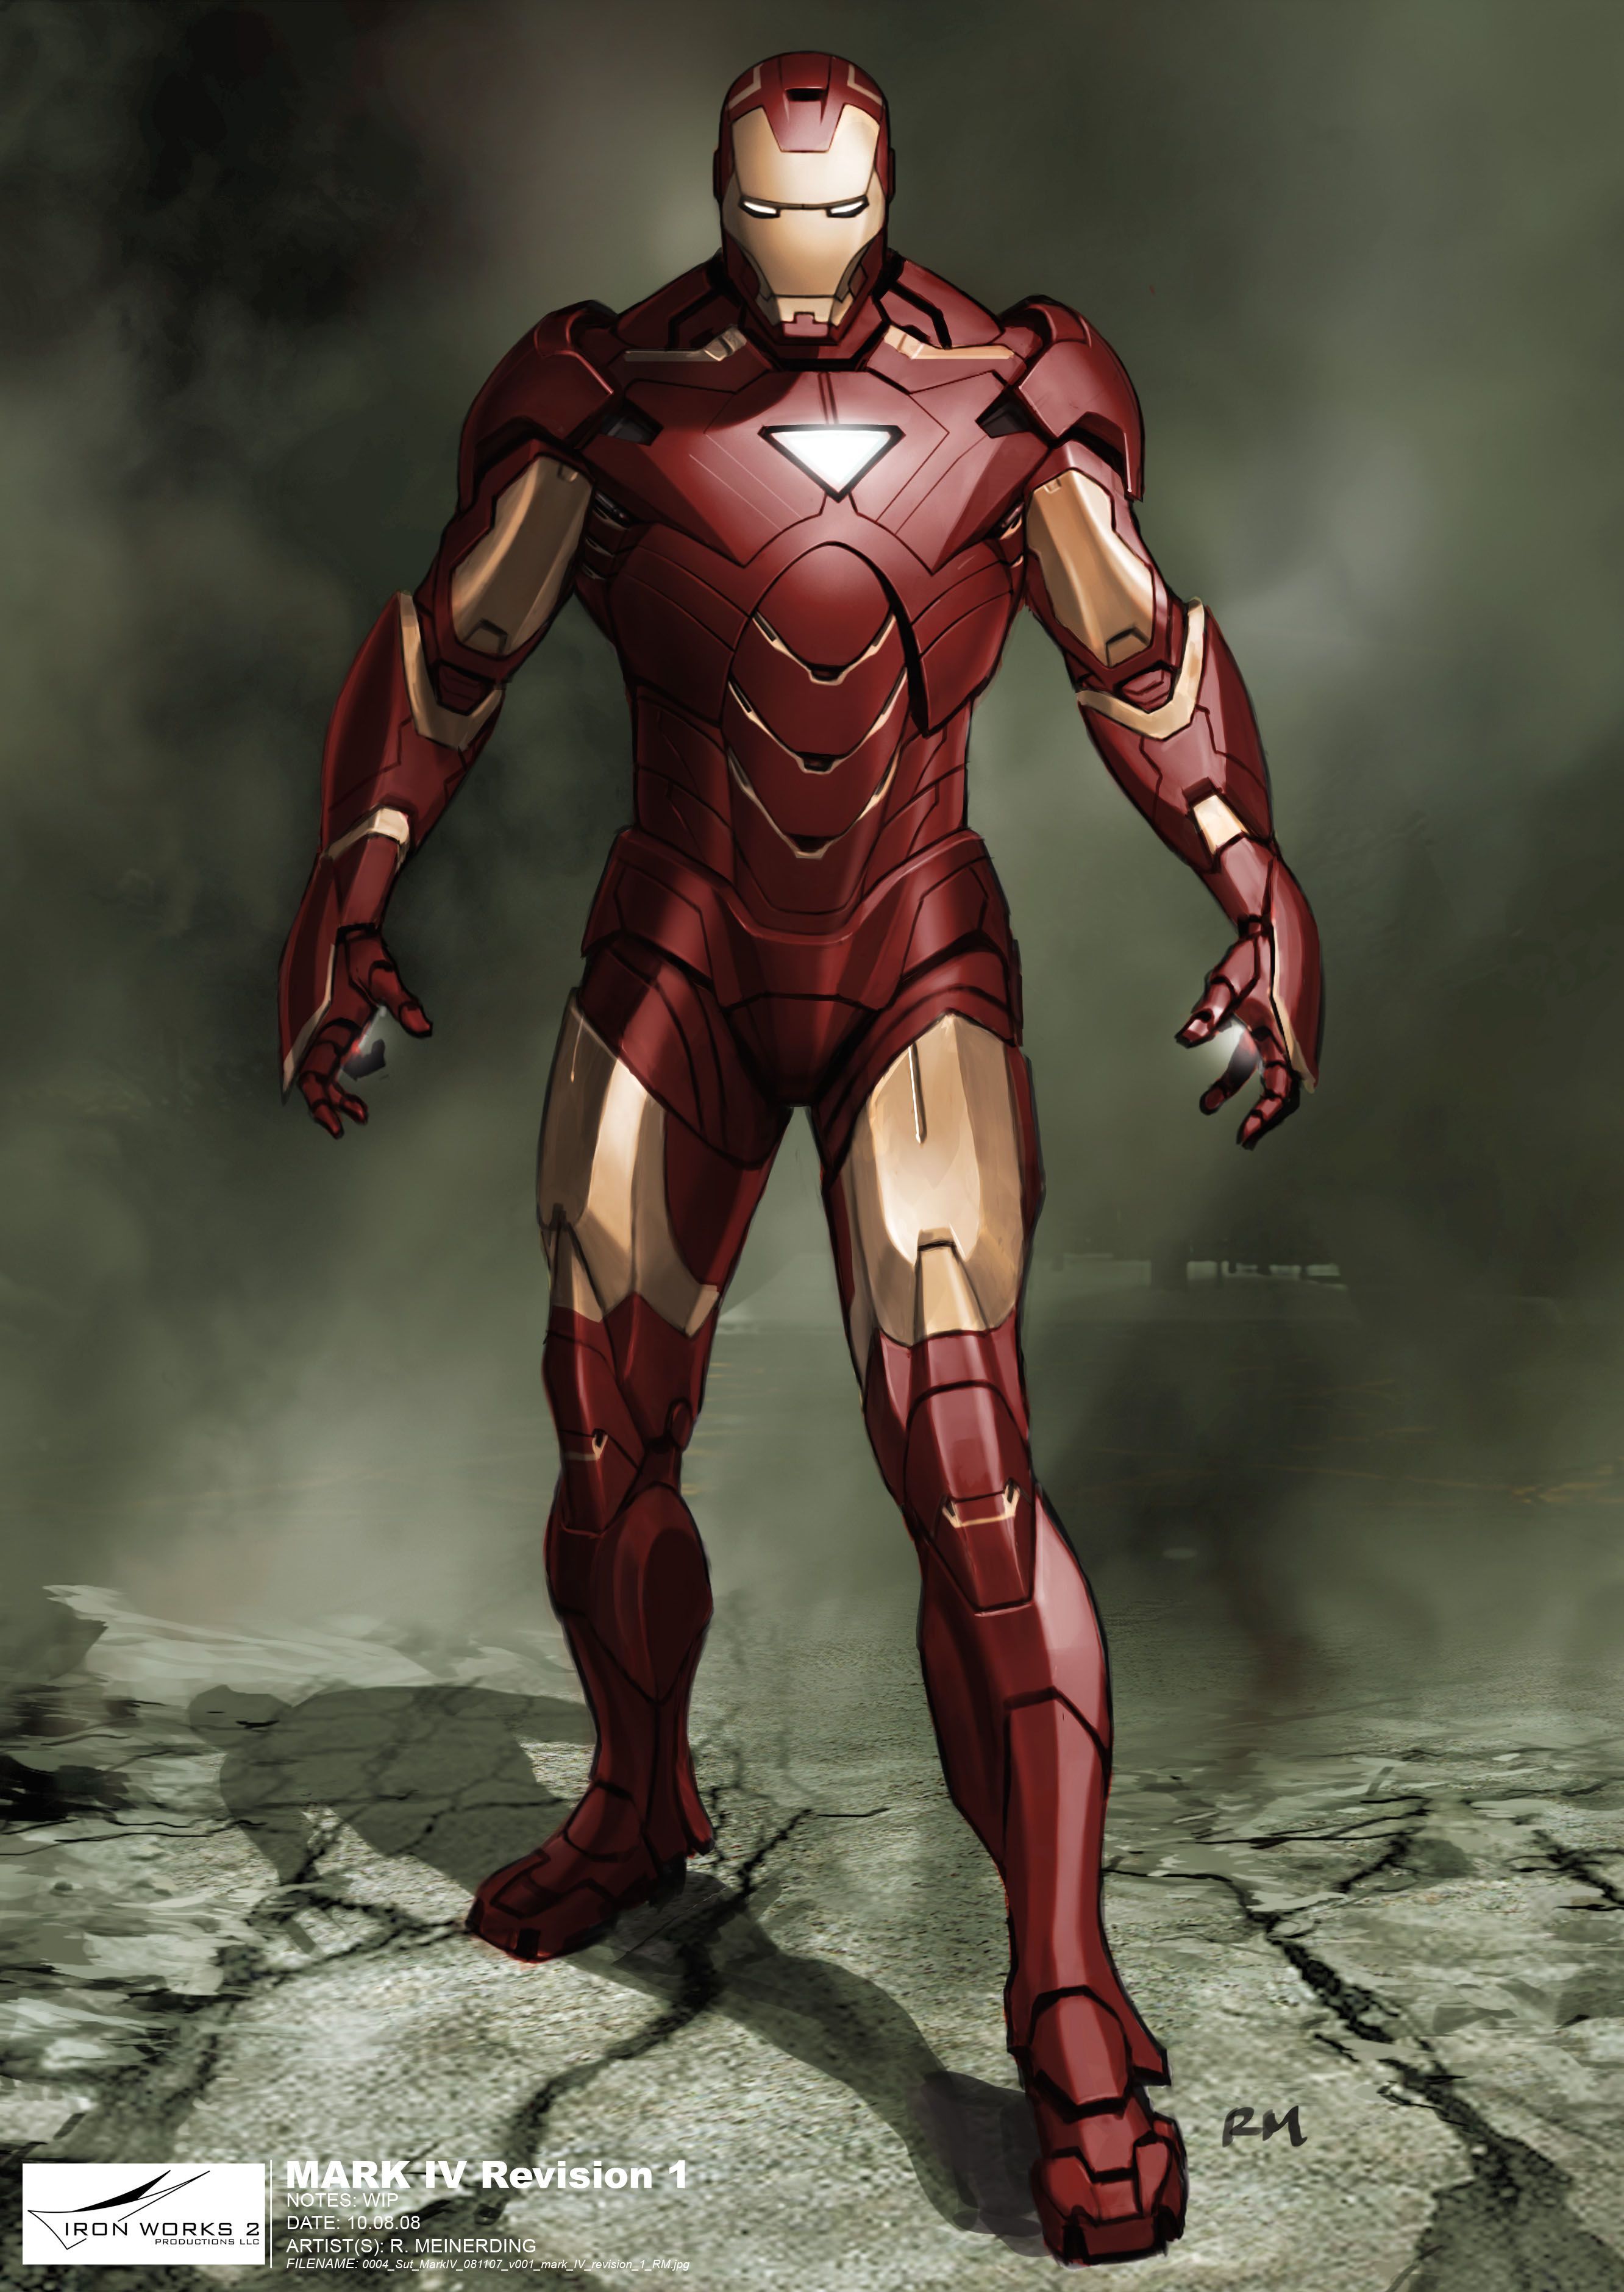 Design secrets of Iron Man 2: Suitcase armor, Whiplash and crazy improv!. Iron man art, Iron man wallpaper, Iron man